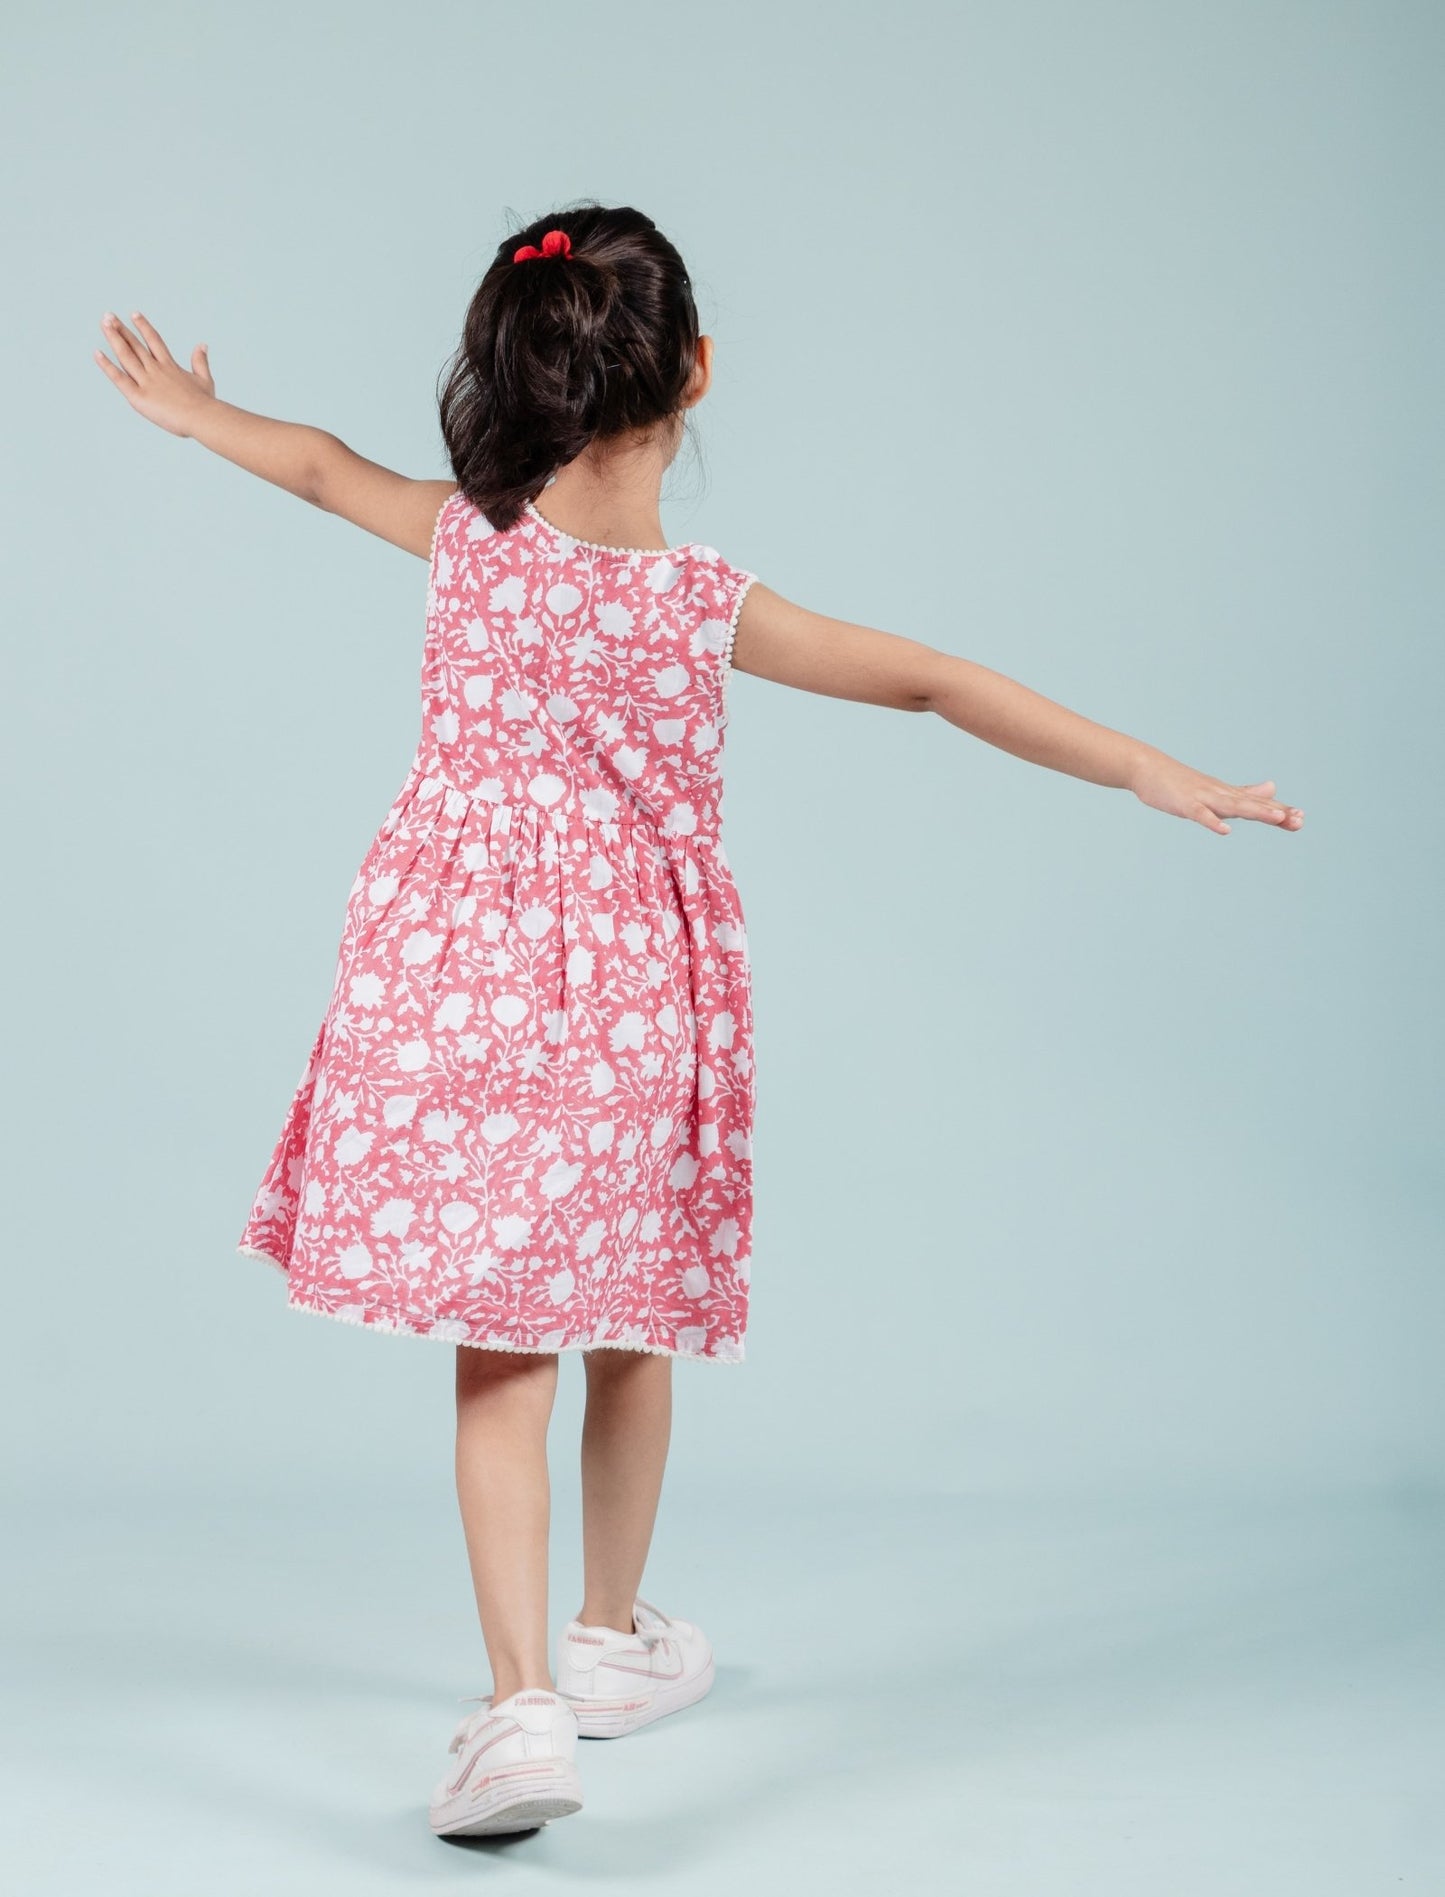 Girls Kids Block Printed Pure Cotton Sleeveless Summer Dress (Red)